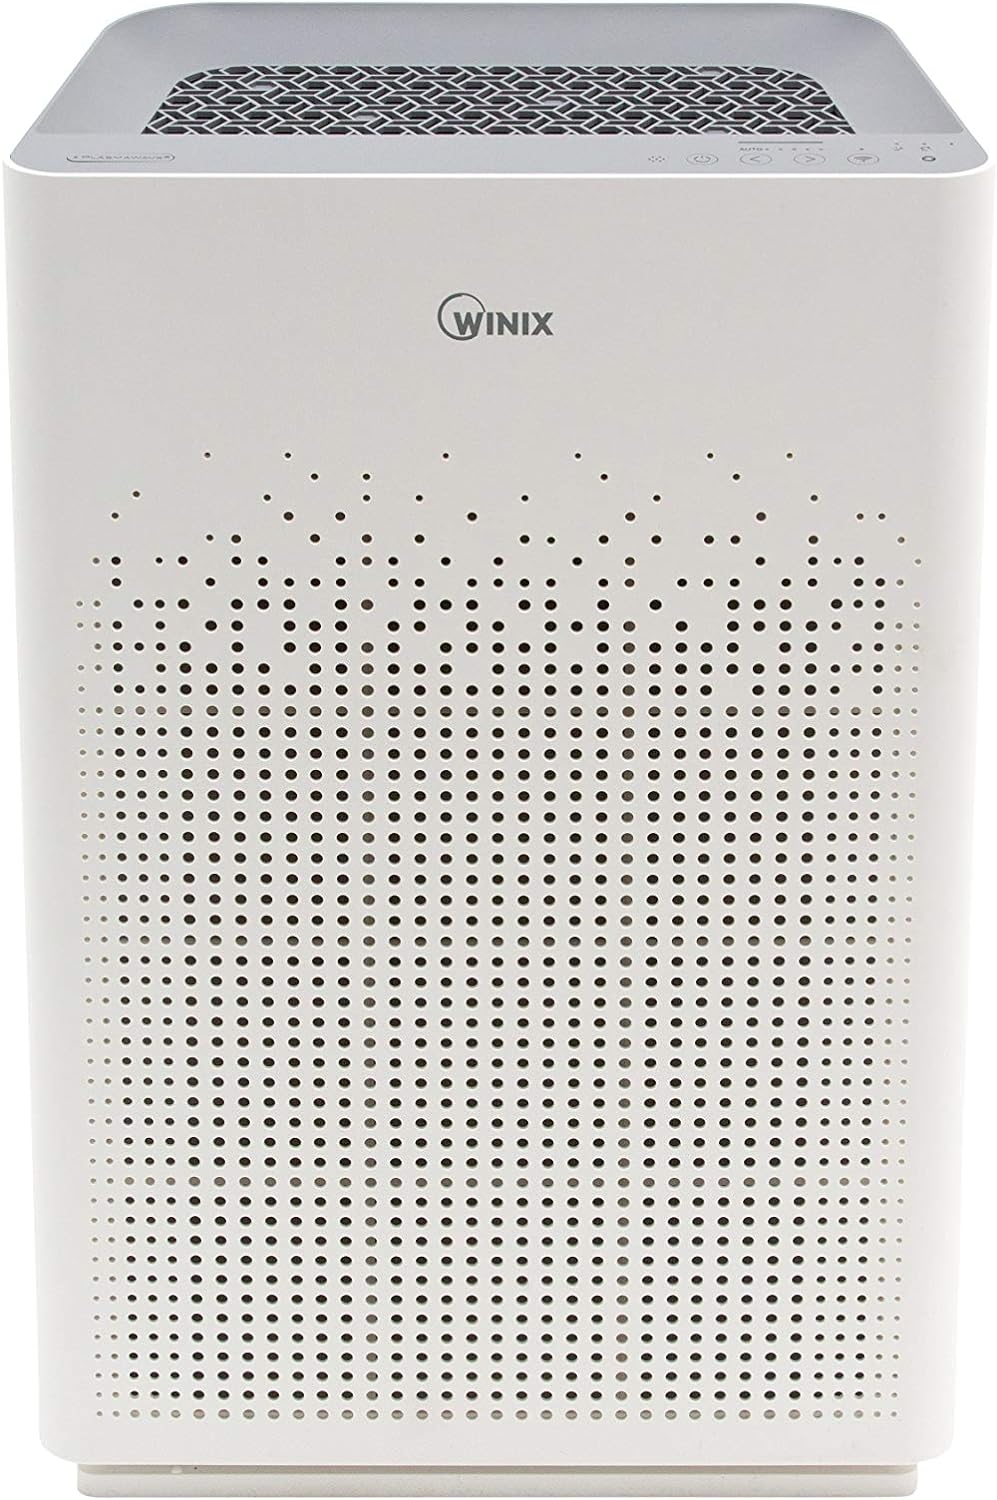 Winix 5500-2 Air Purifier Review